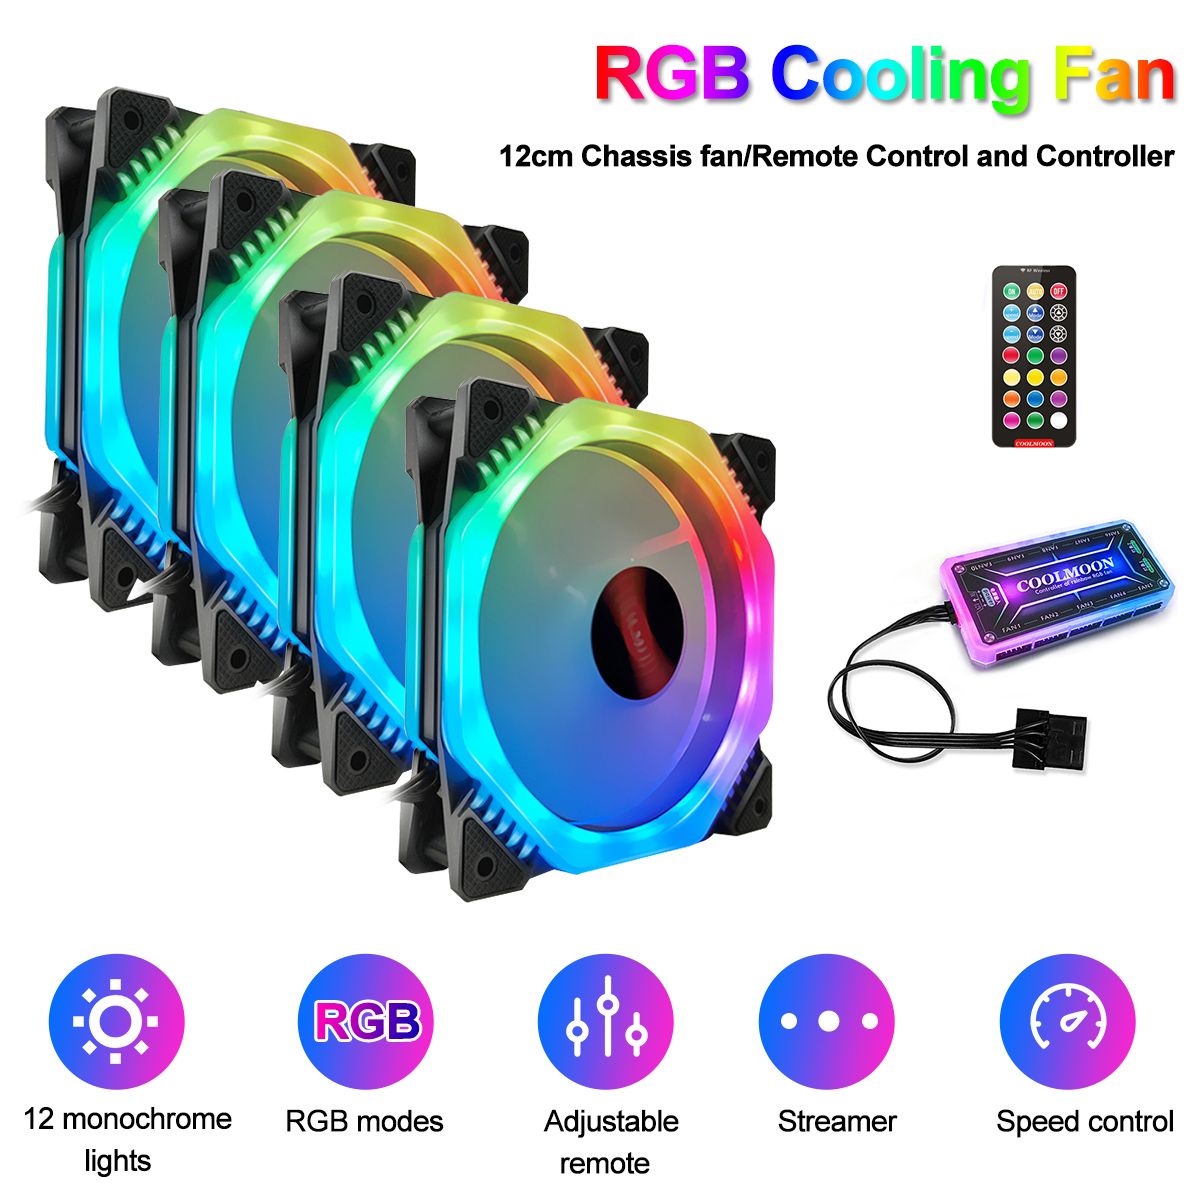 Computer-PC-Cooler-Cooling-Fan-RGB-LED-Multicolor-mode-12cm-Quiet-Chassis-Fan-1634936